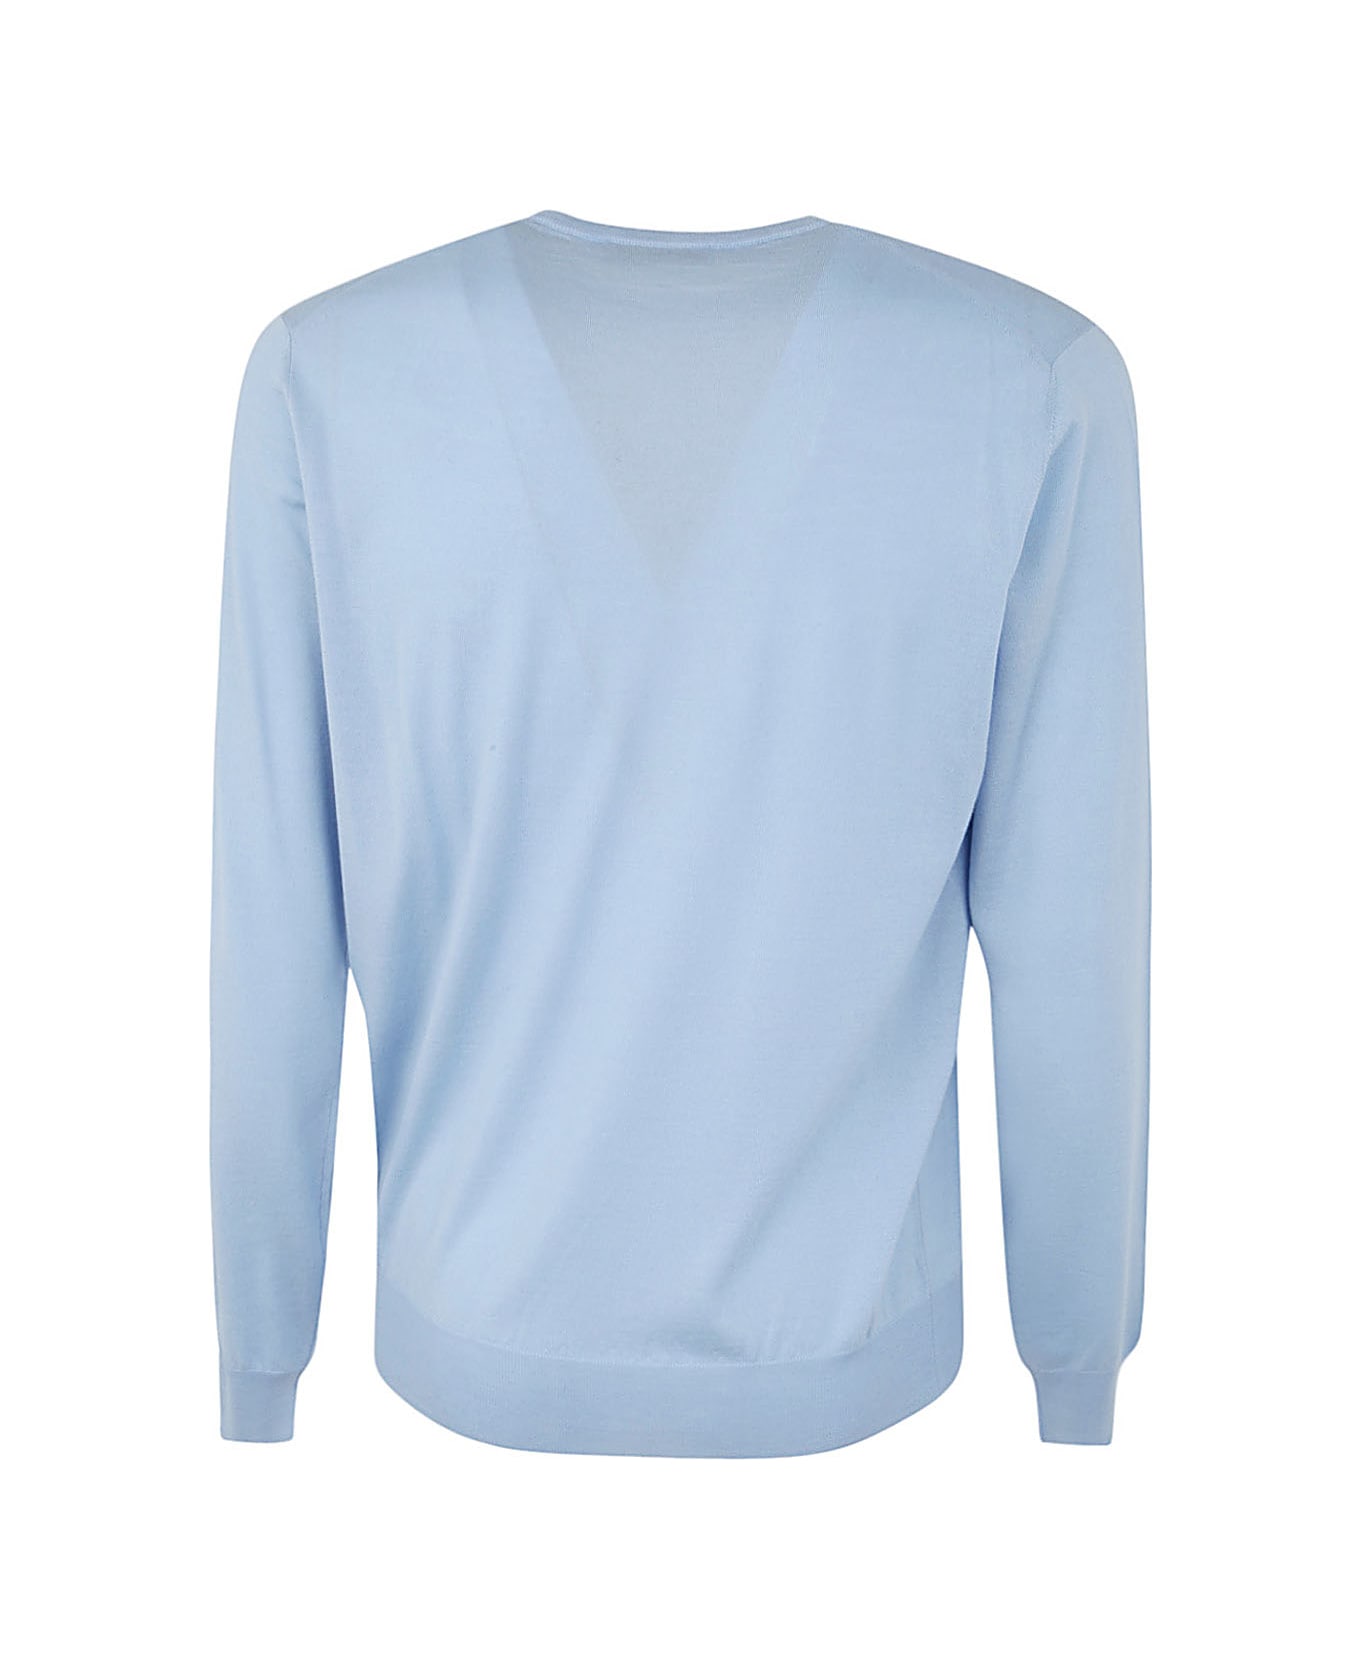 Filippo De Laurentiis Wool Silk Cashmere Long Sleeves Crew Neck Sweater - Light Blue